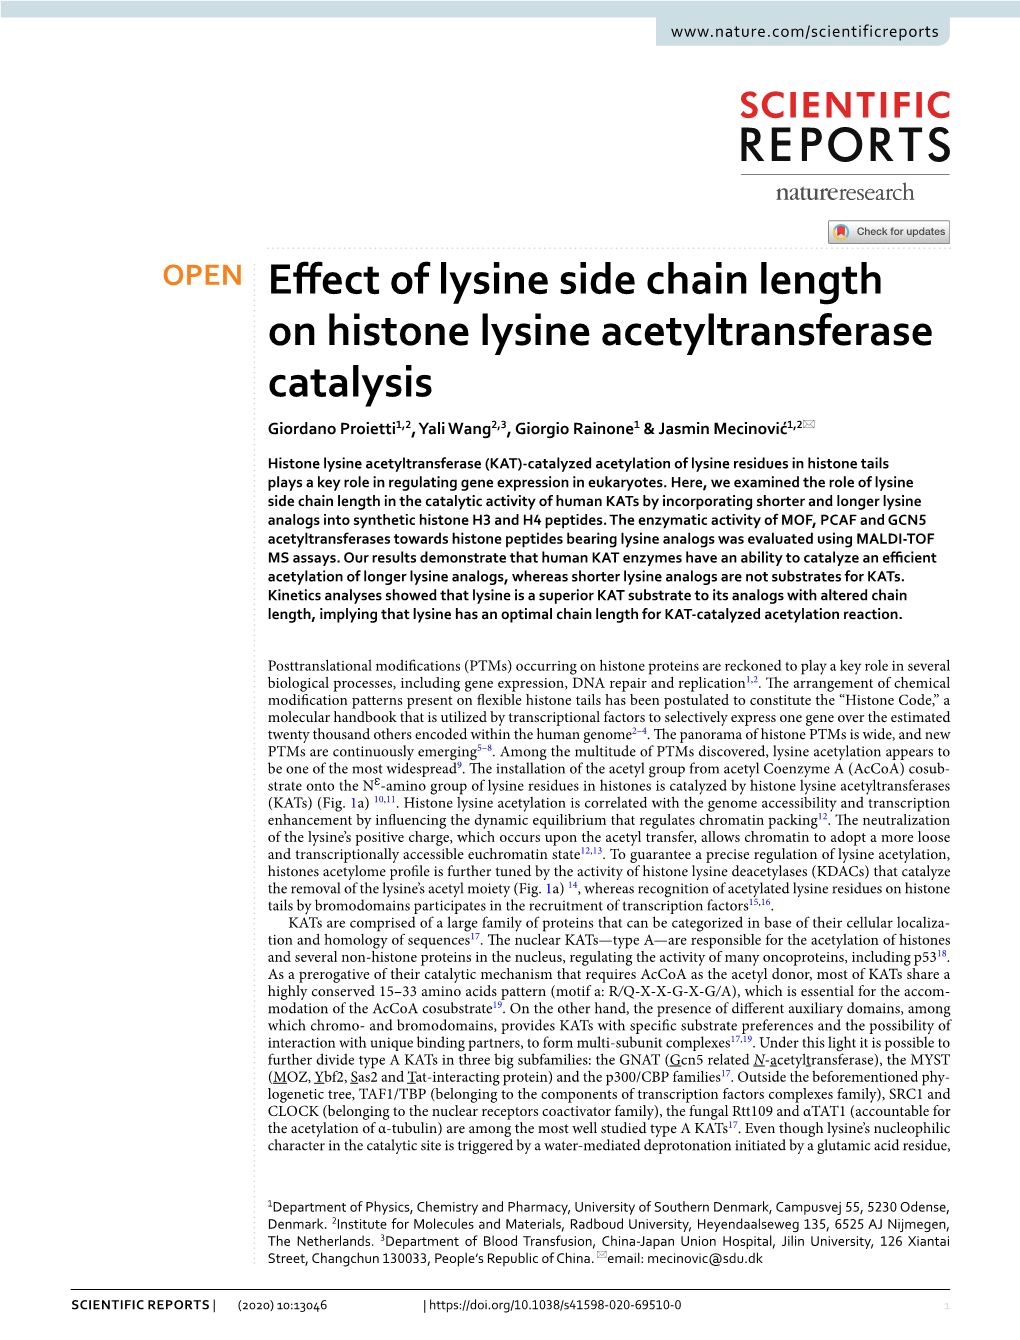 Effect of Lysine Side Chain Length on Histone Lysine Acetyltransferase